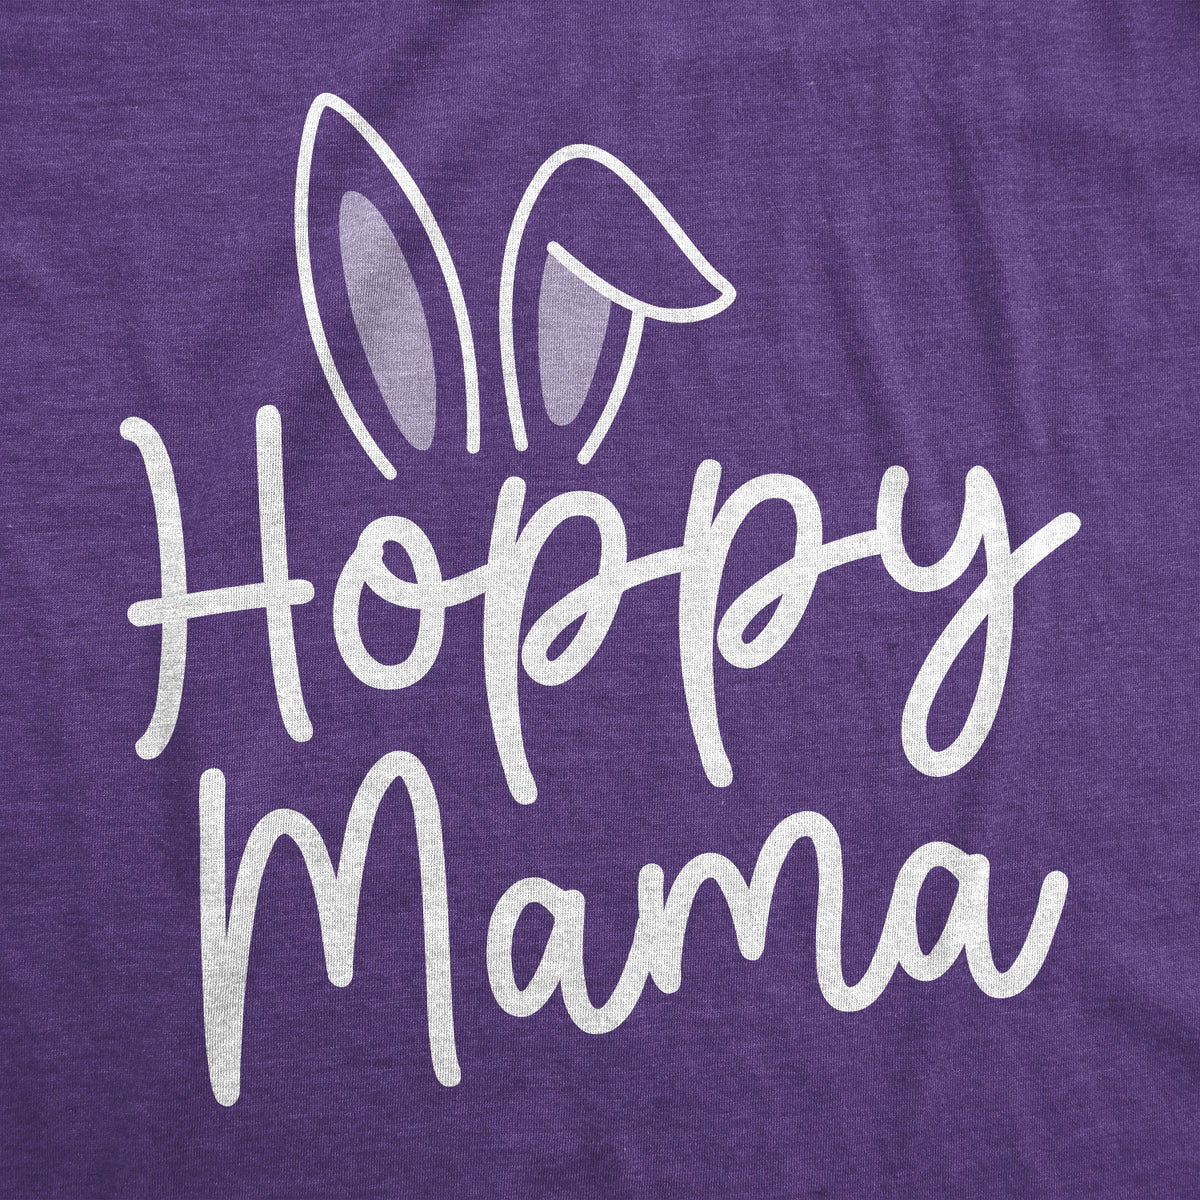 Hoppy Momma Maternity Tshirt